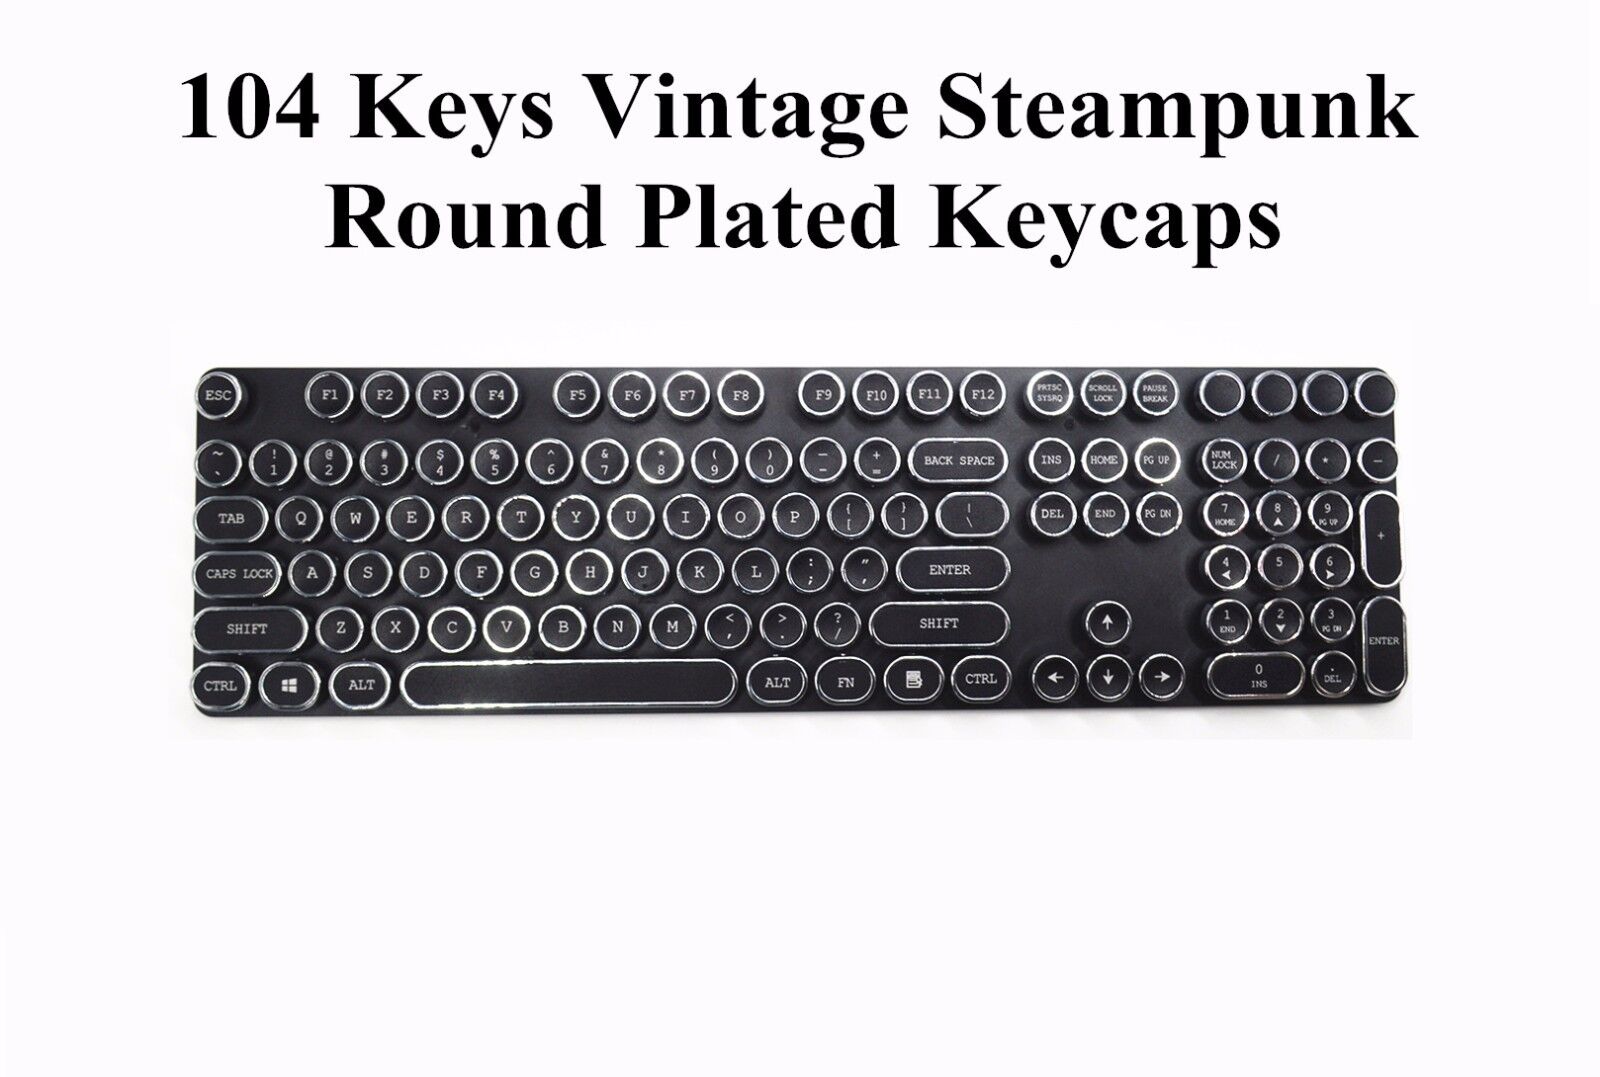 Steampunk Round Plated Typewriter Keycap OEM for Cherry MX Mechanical Keyboard